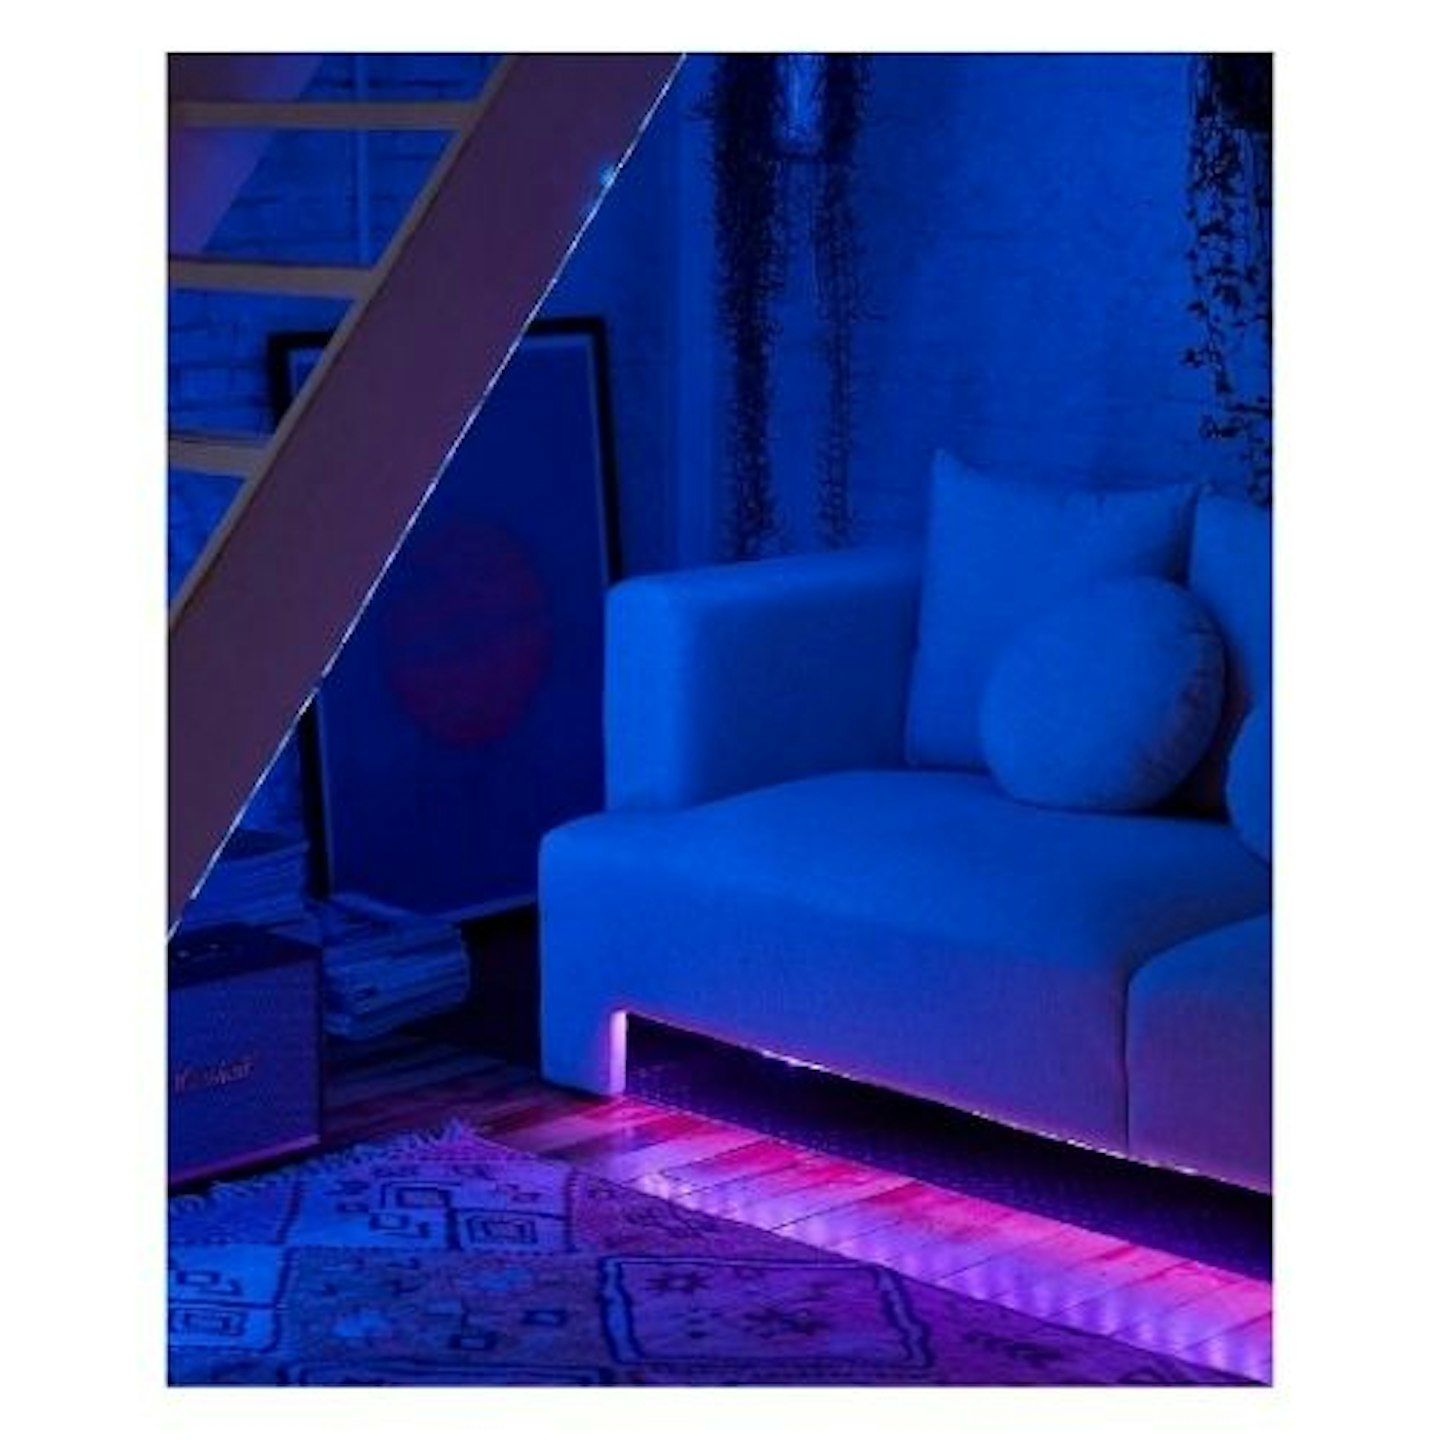 Sound reactive LED Strip Light in a living room